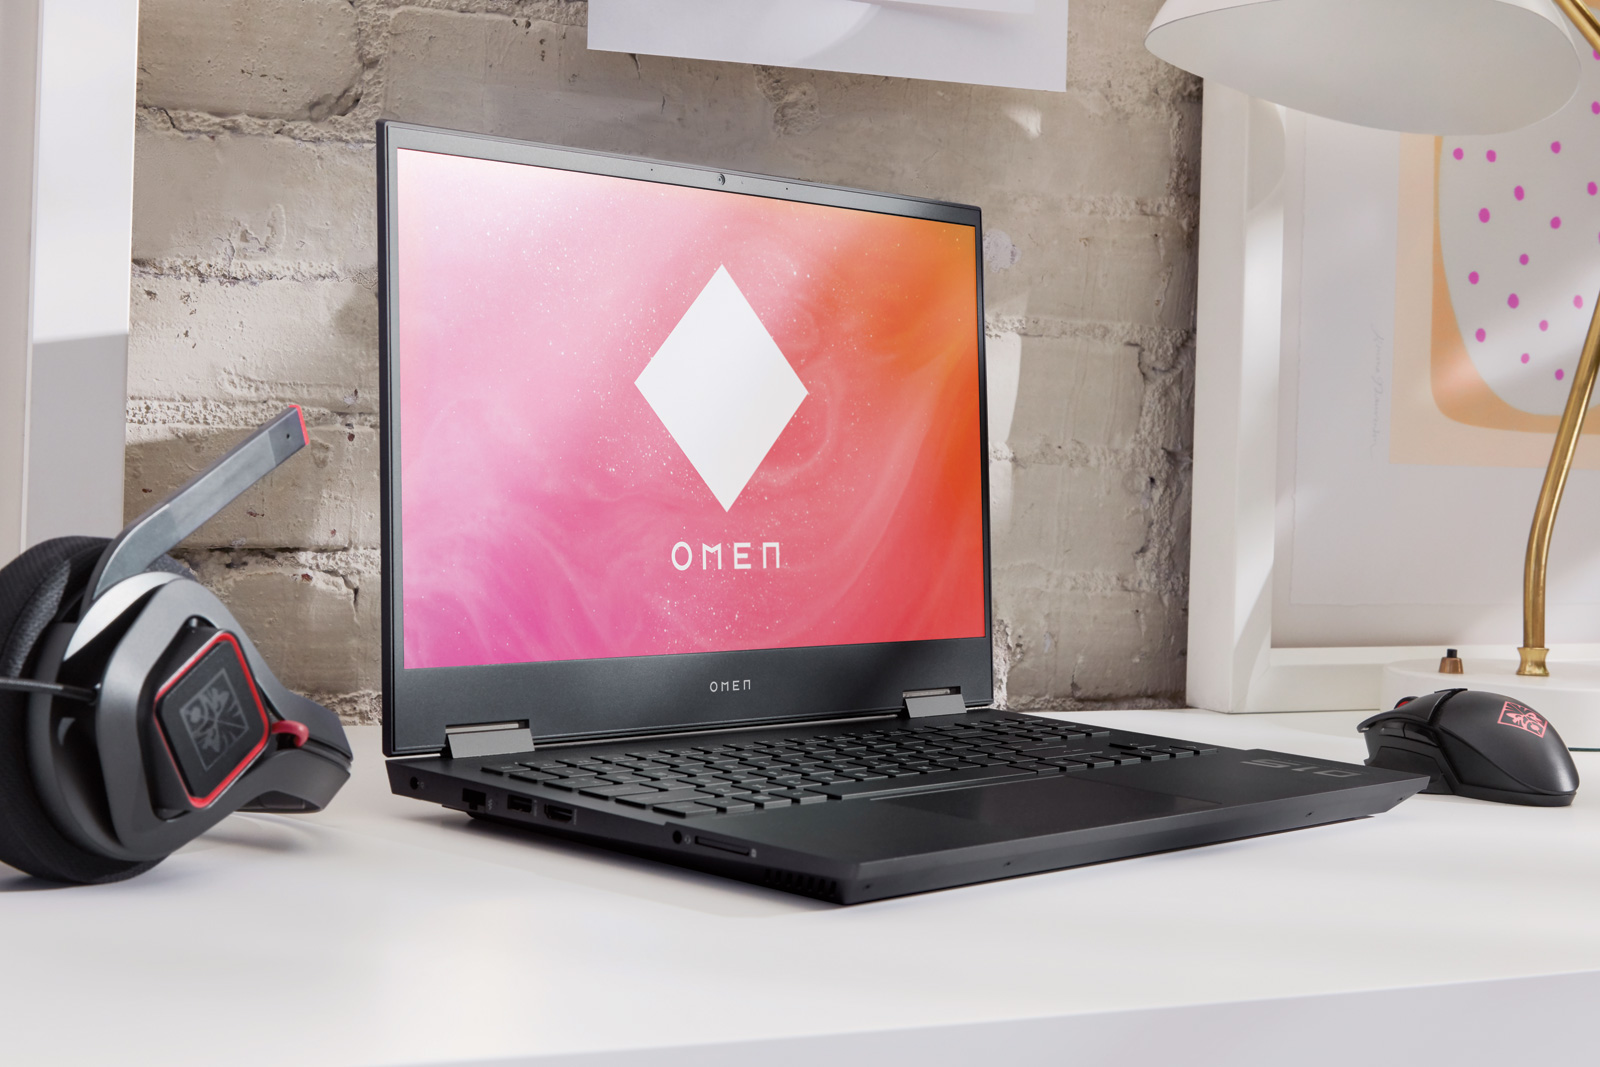 HP Omen 15 2021 laptop leaks, features Ryzen 7 5800H CPU and GeForce